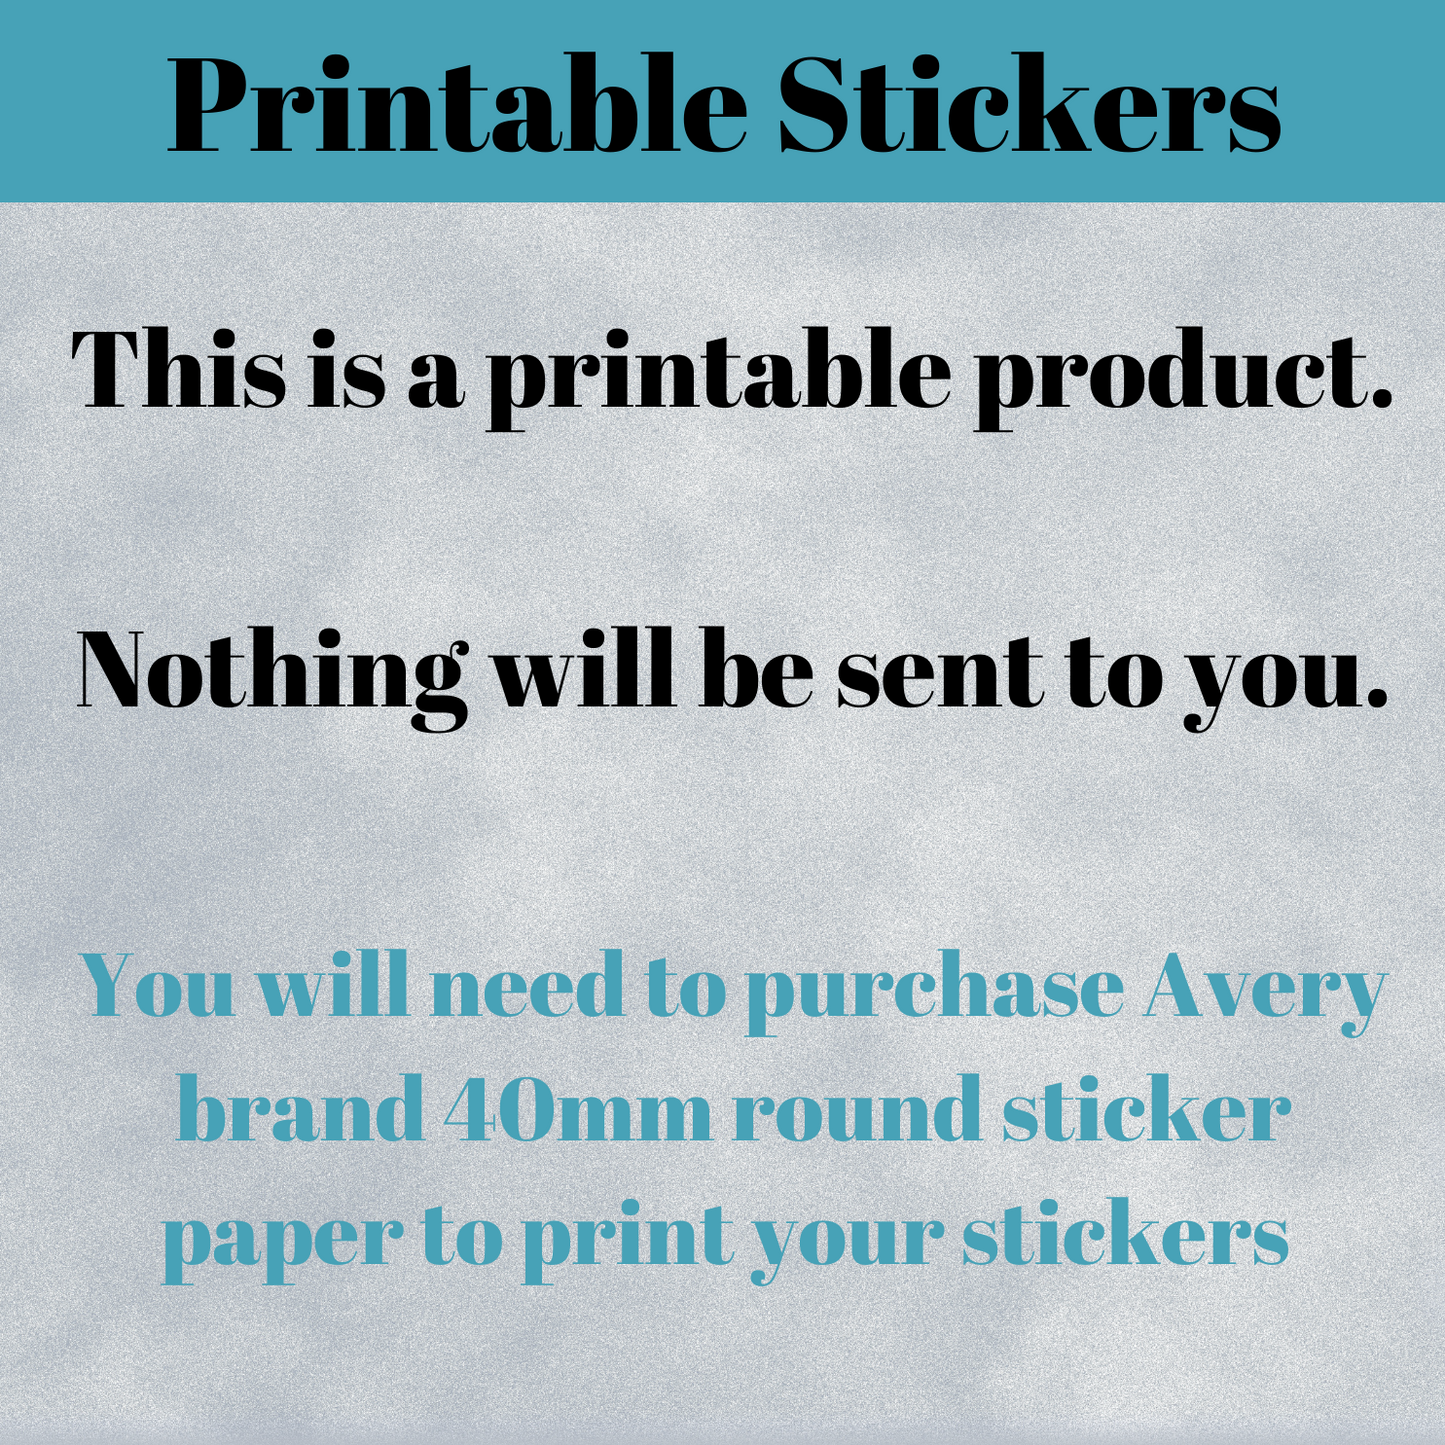 Monster Printable Teaching Stickers